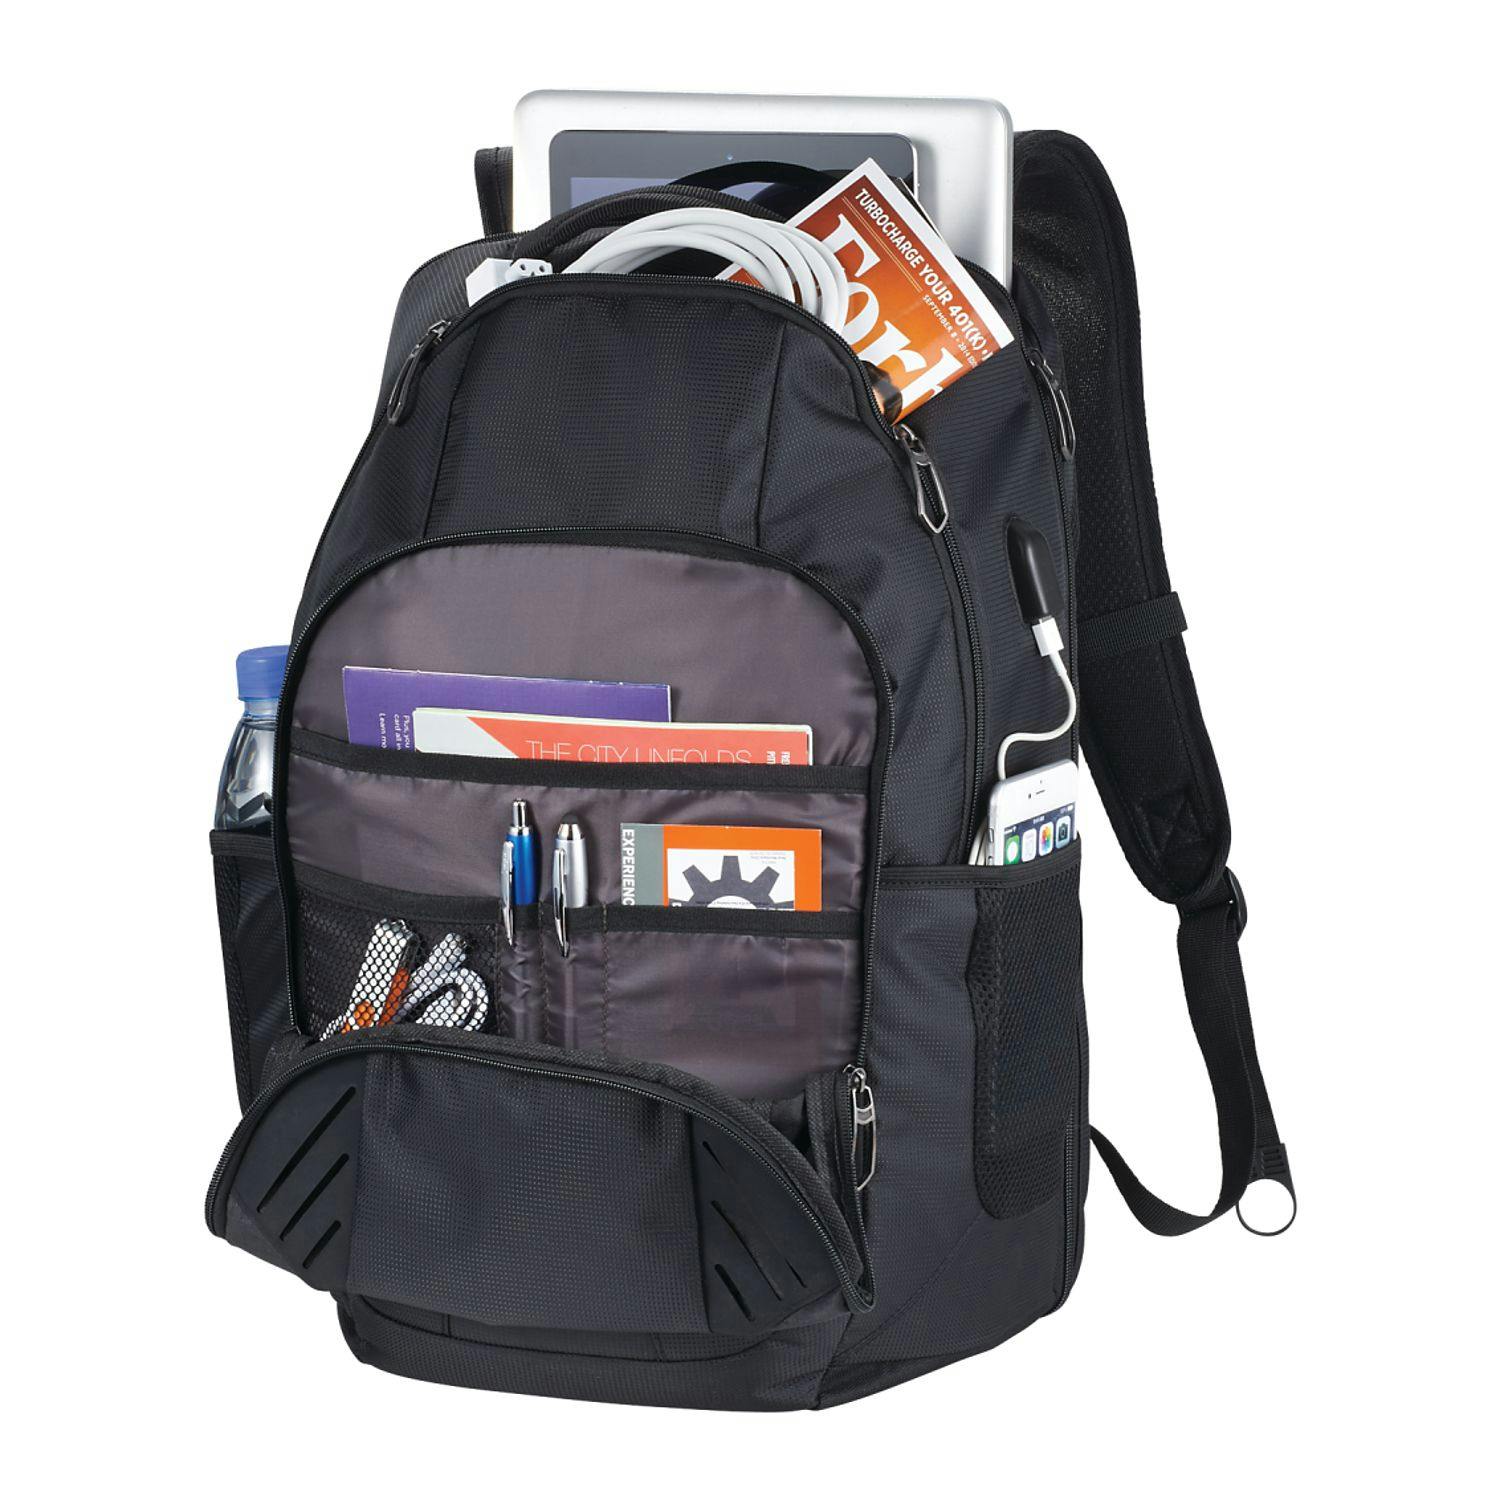 Foyager TSA 15" Computer Backpack - additional Image 3